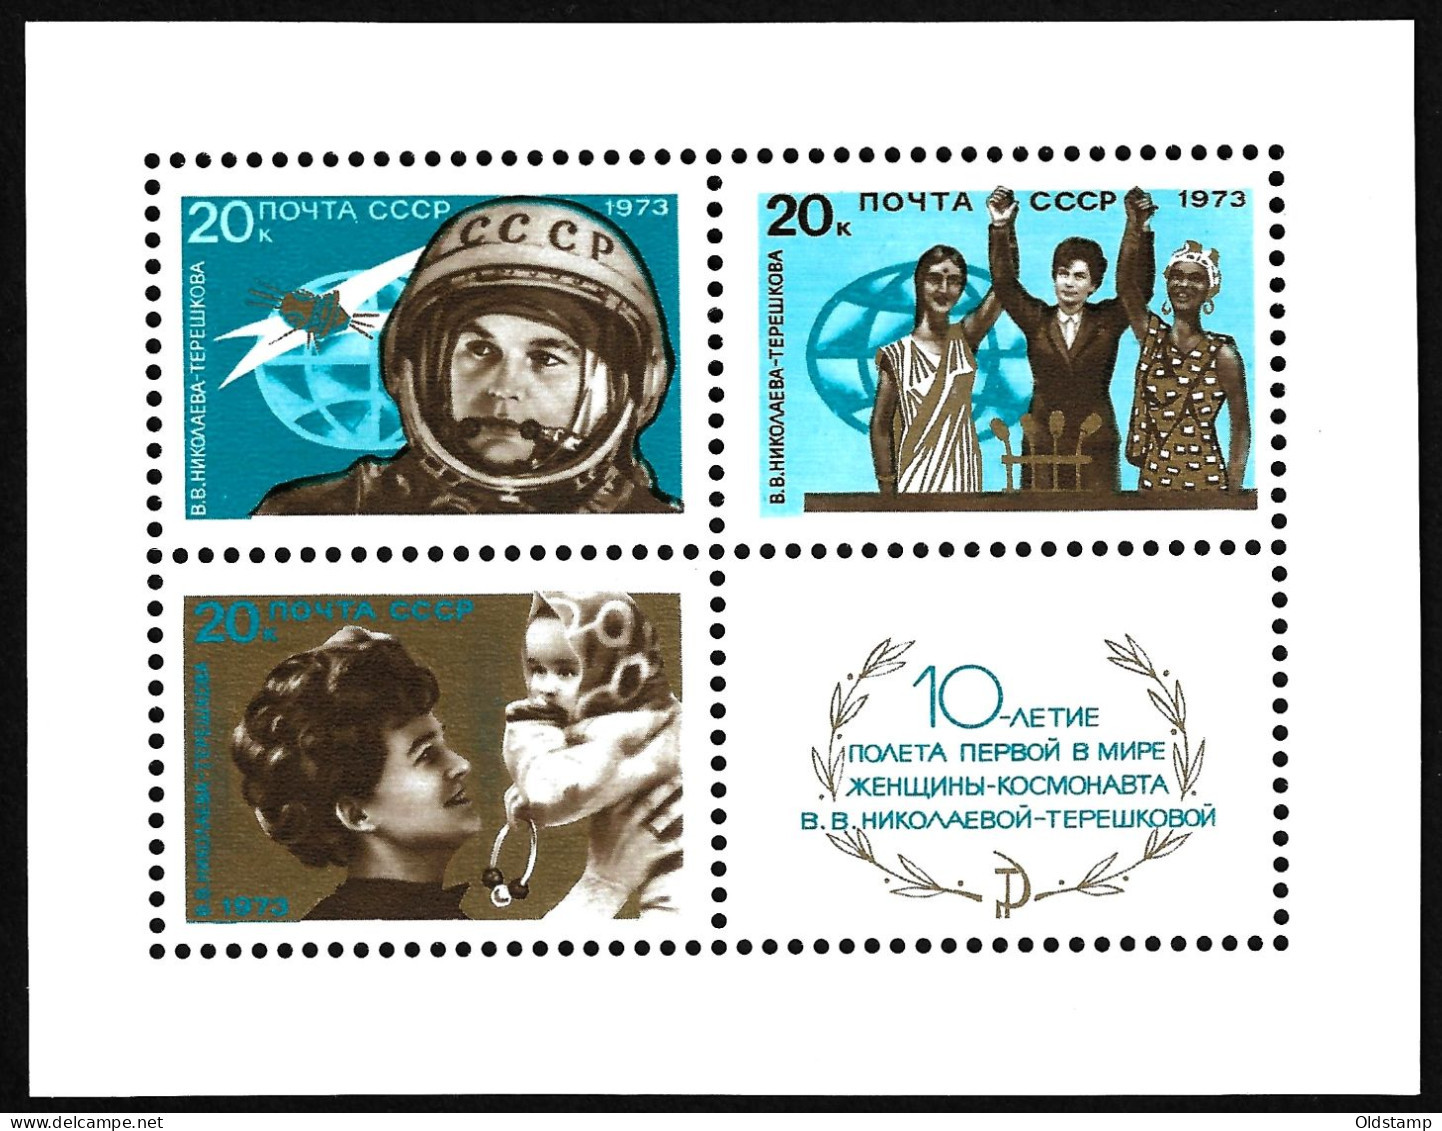 USSR 1973 SPACE MNH GAGARIN Soviet Union 20k. Space Gagarin 10th Flight Tereshkova MNH Stamp Mi. Block # - Collections